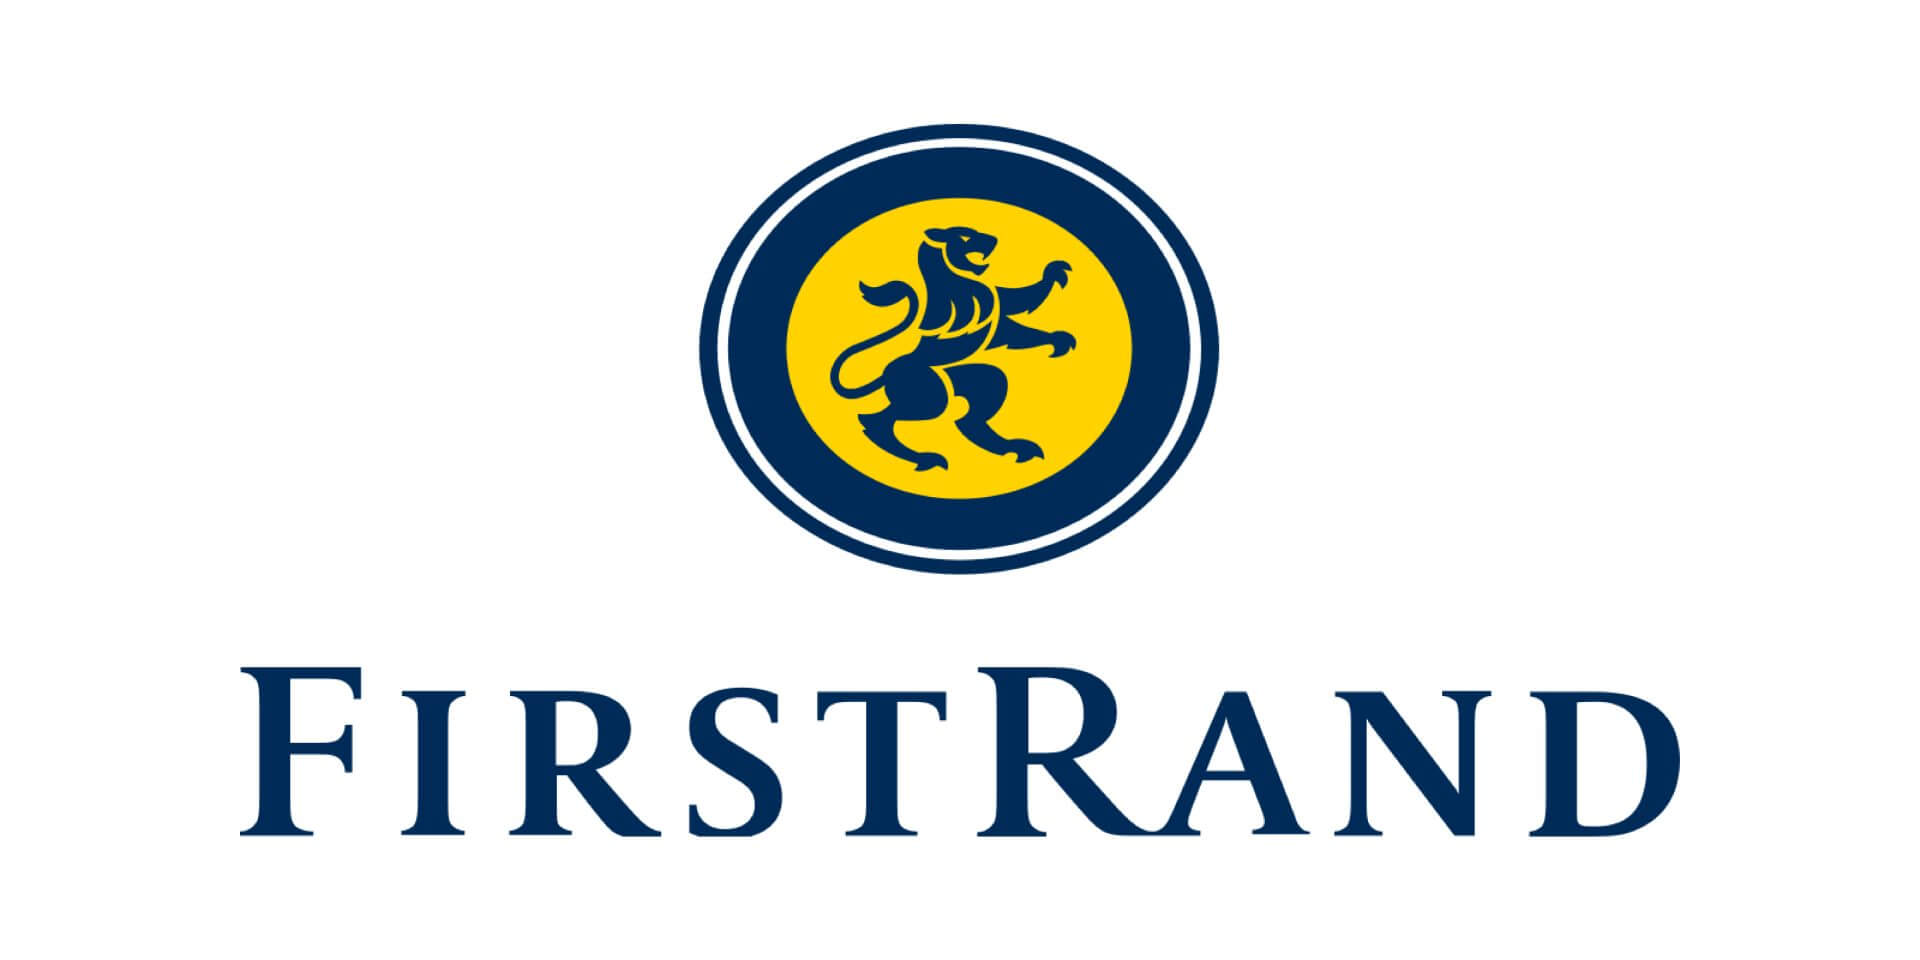 First Rand Group Logo